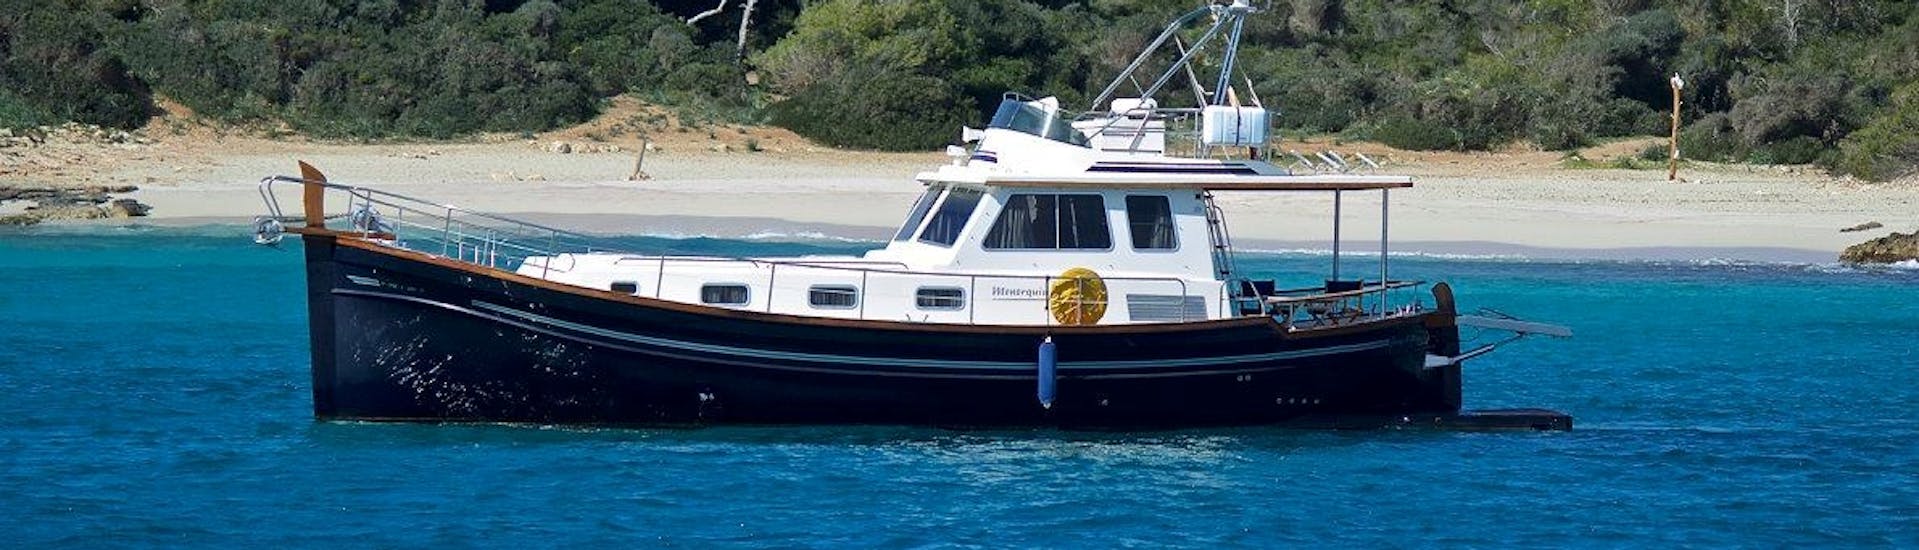 Unser Boot im Meer während der Private Yachttour nach Aubarca & Cala Mesquida - All Inkl. mit Charters Llevant Mallorca.